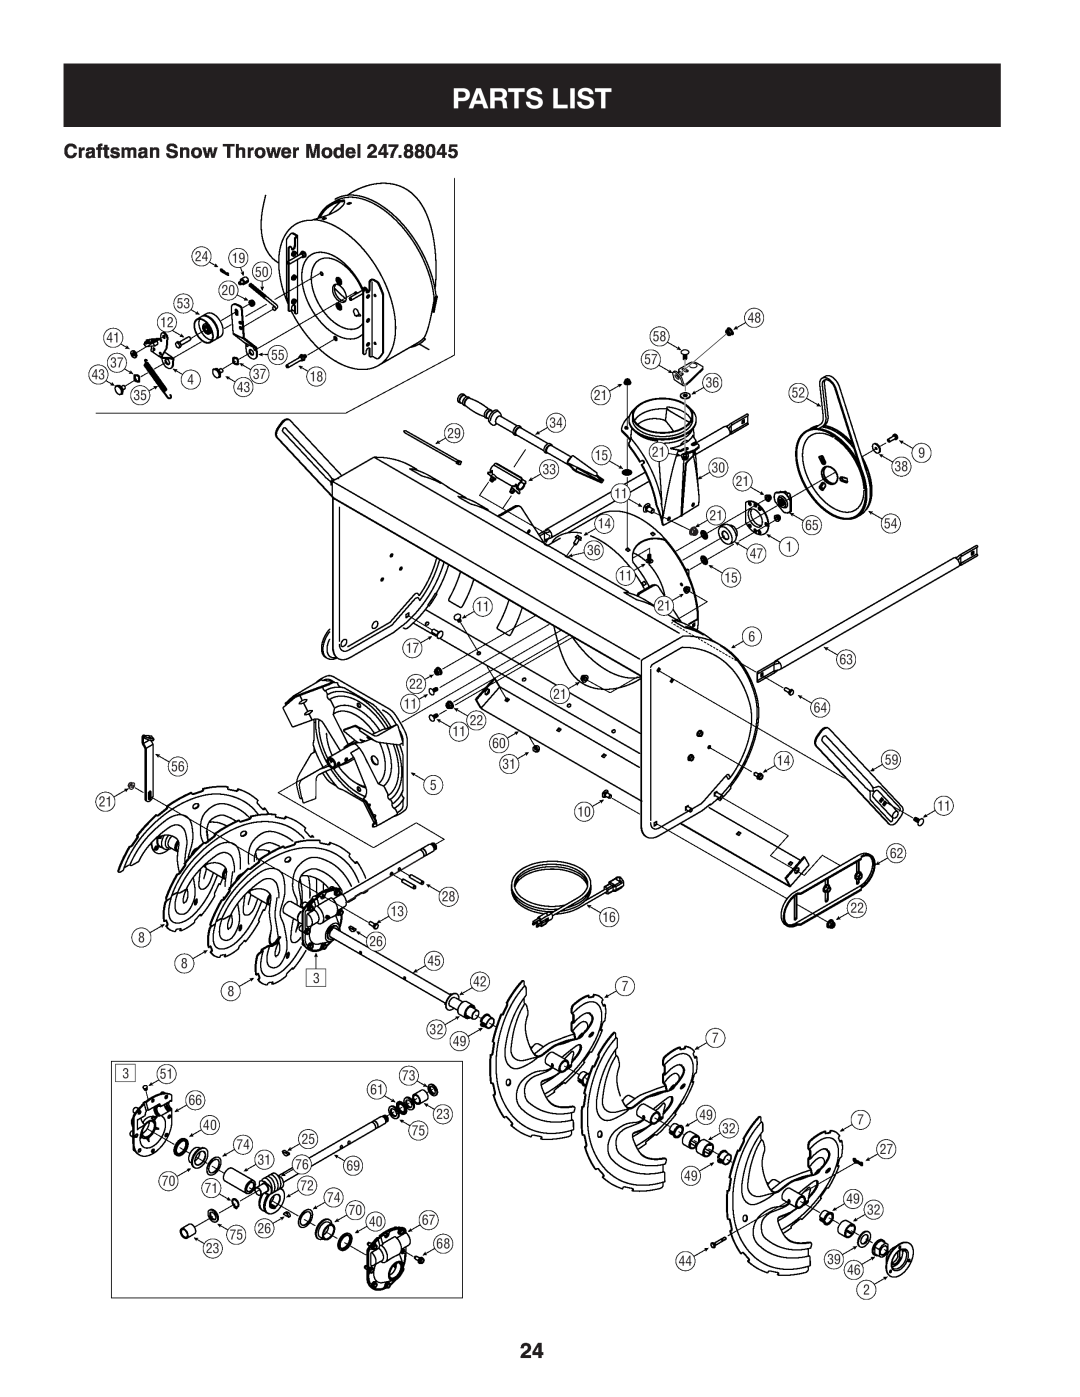 Craftsman 247.88045 manual Parts List, Craftsman Snow Thrower Model 